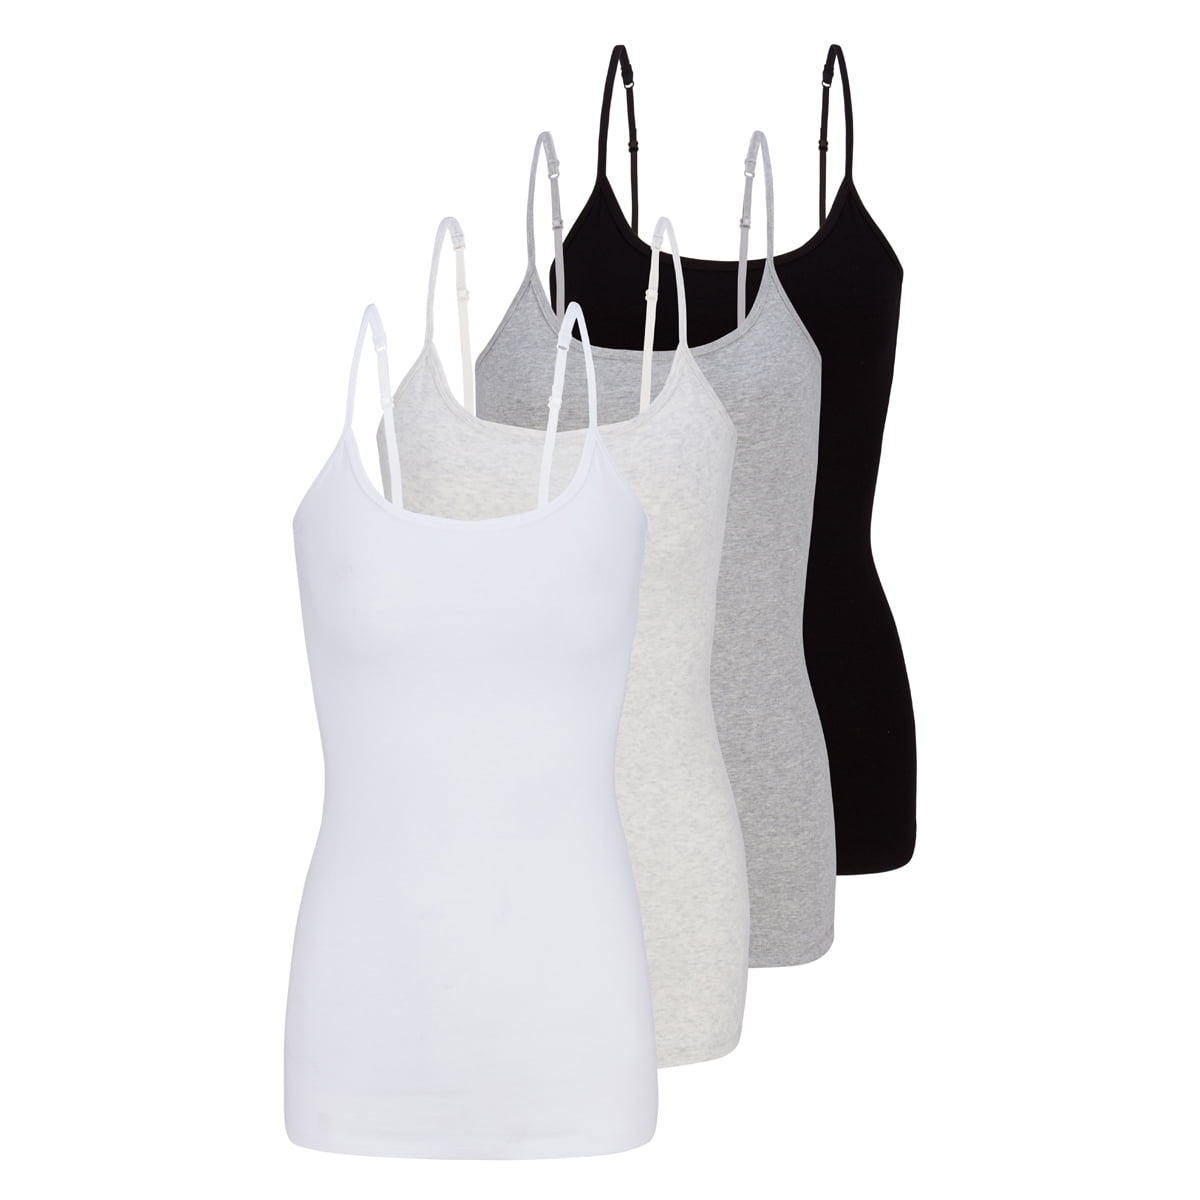 Natural Uniform Women's Camisole Cotton Stretch Undershirt with